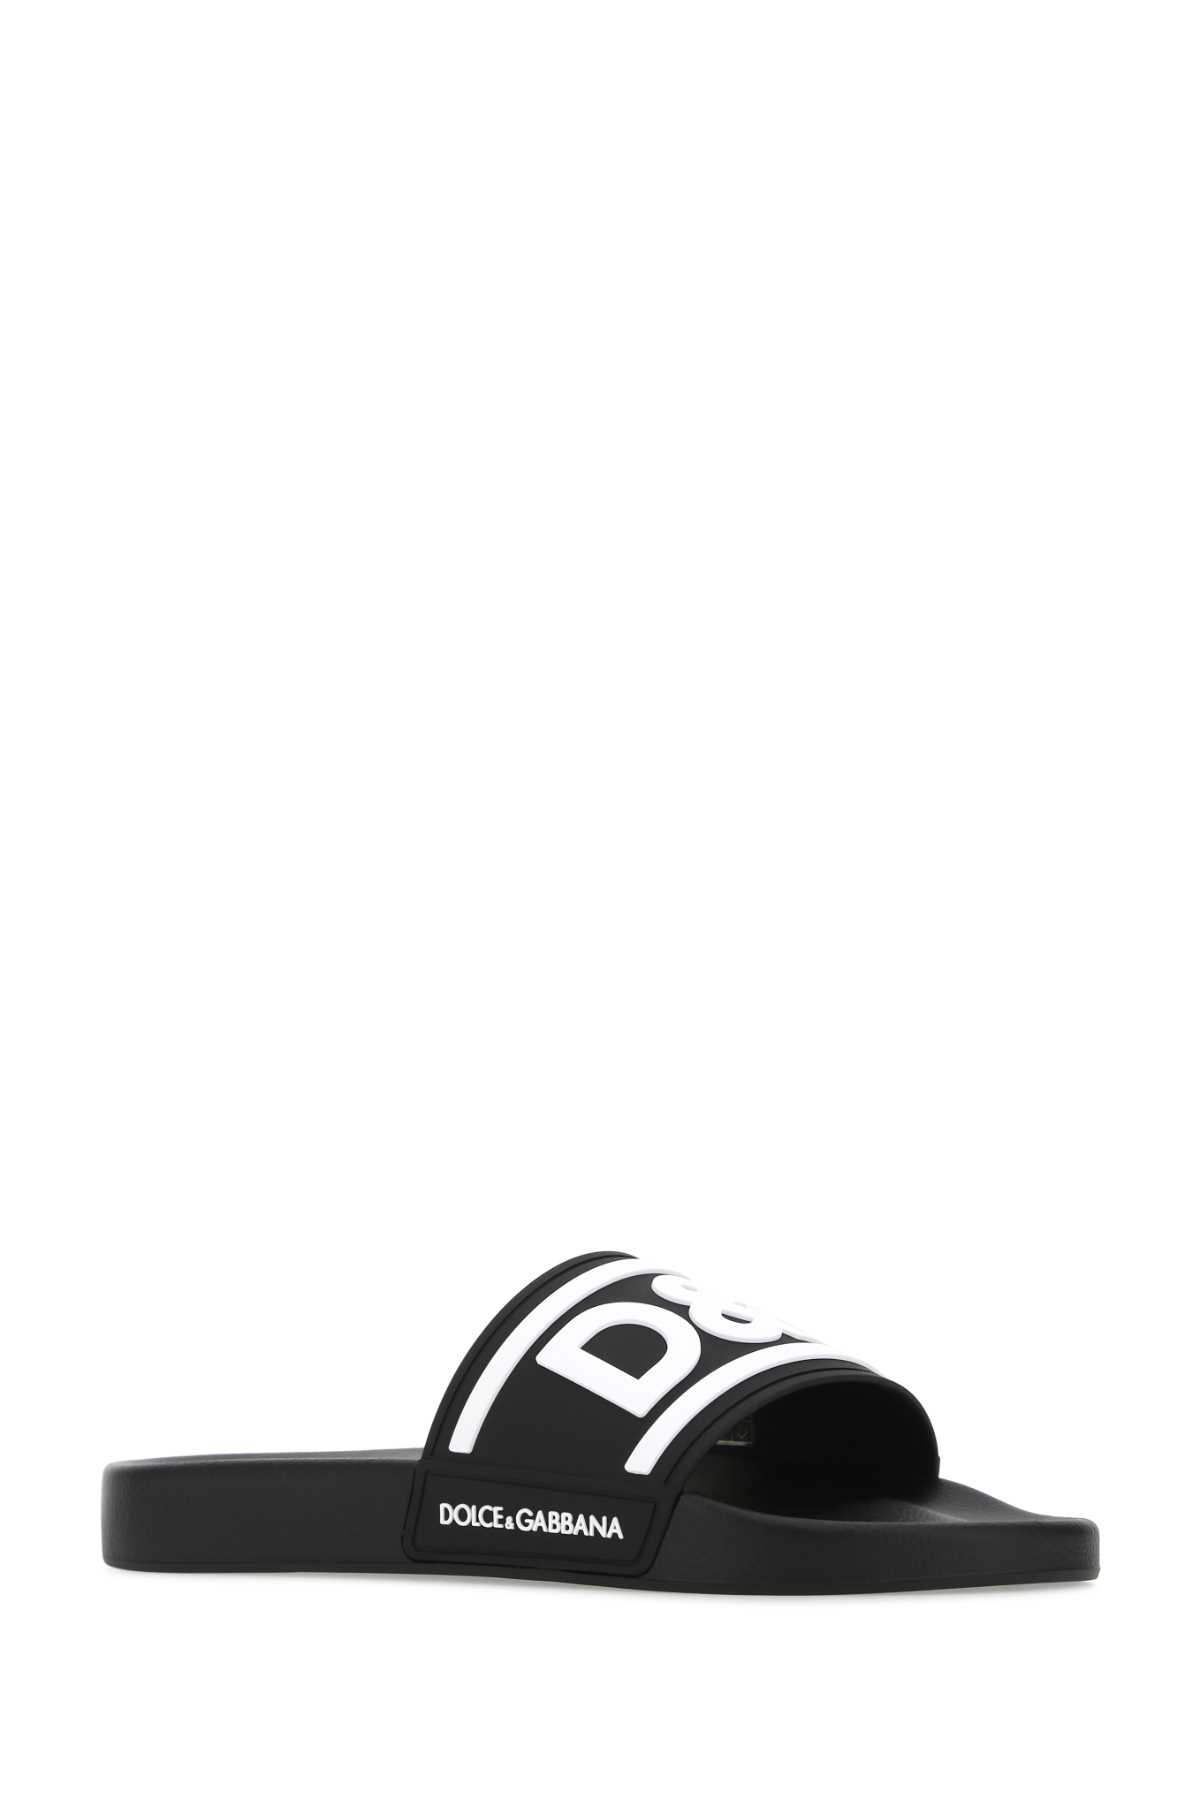 Dolce & Gabbana Black Rubber Slippers In 89690